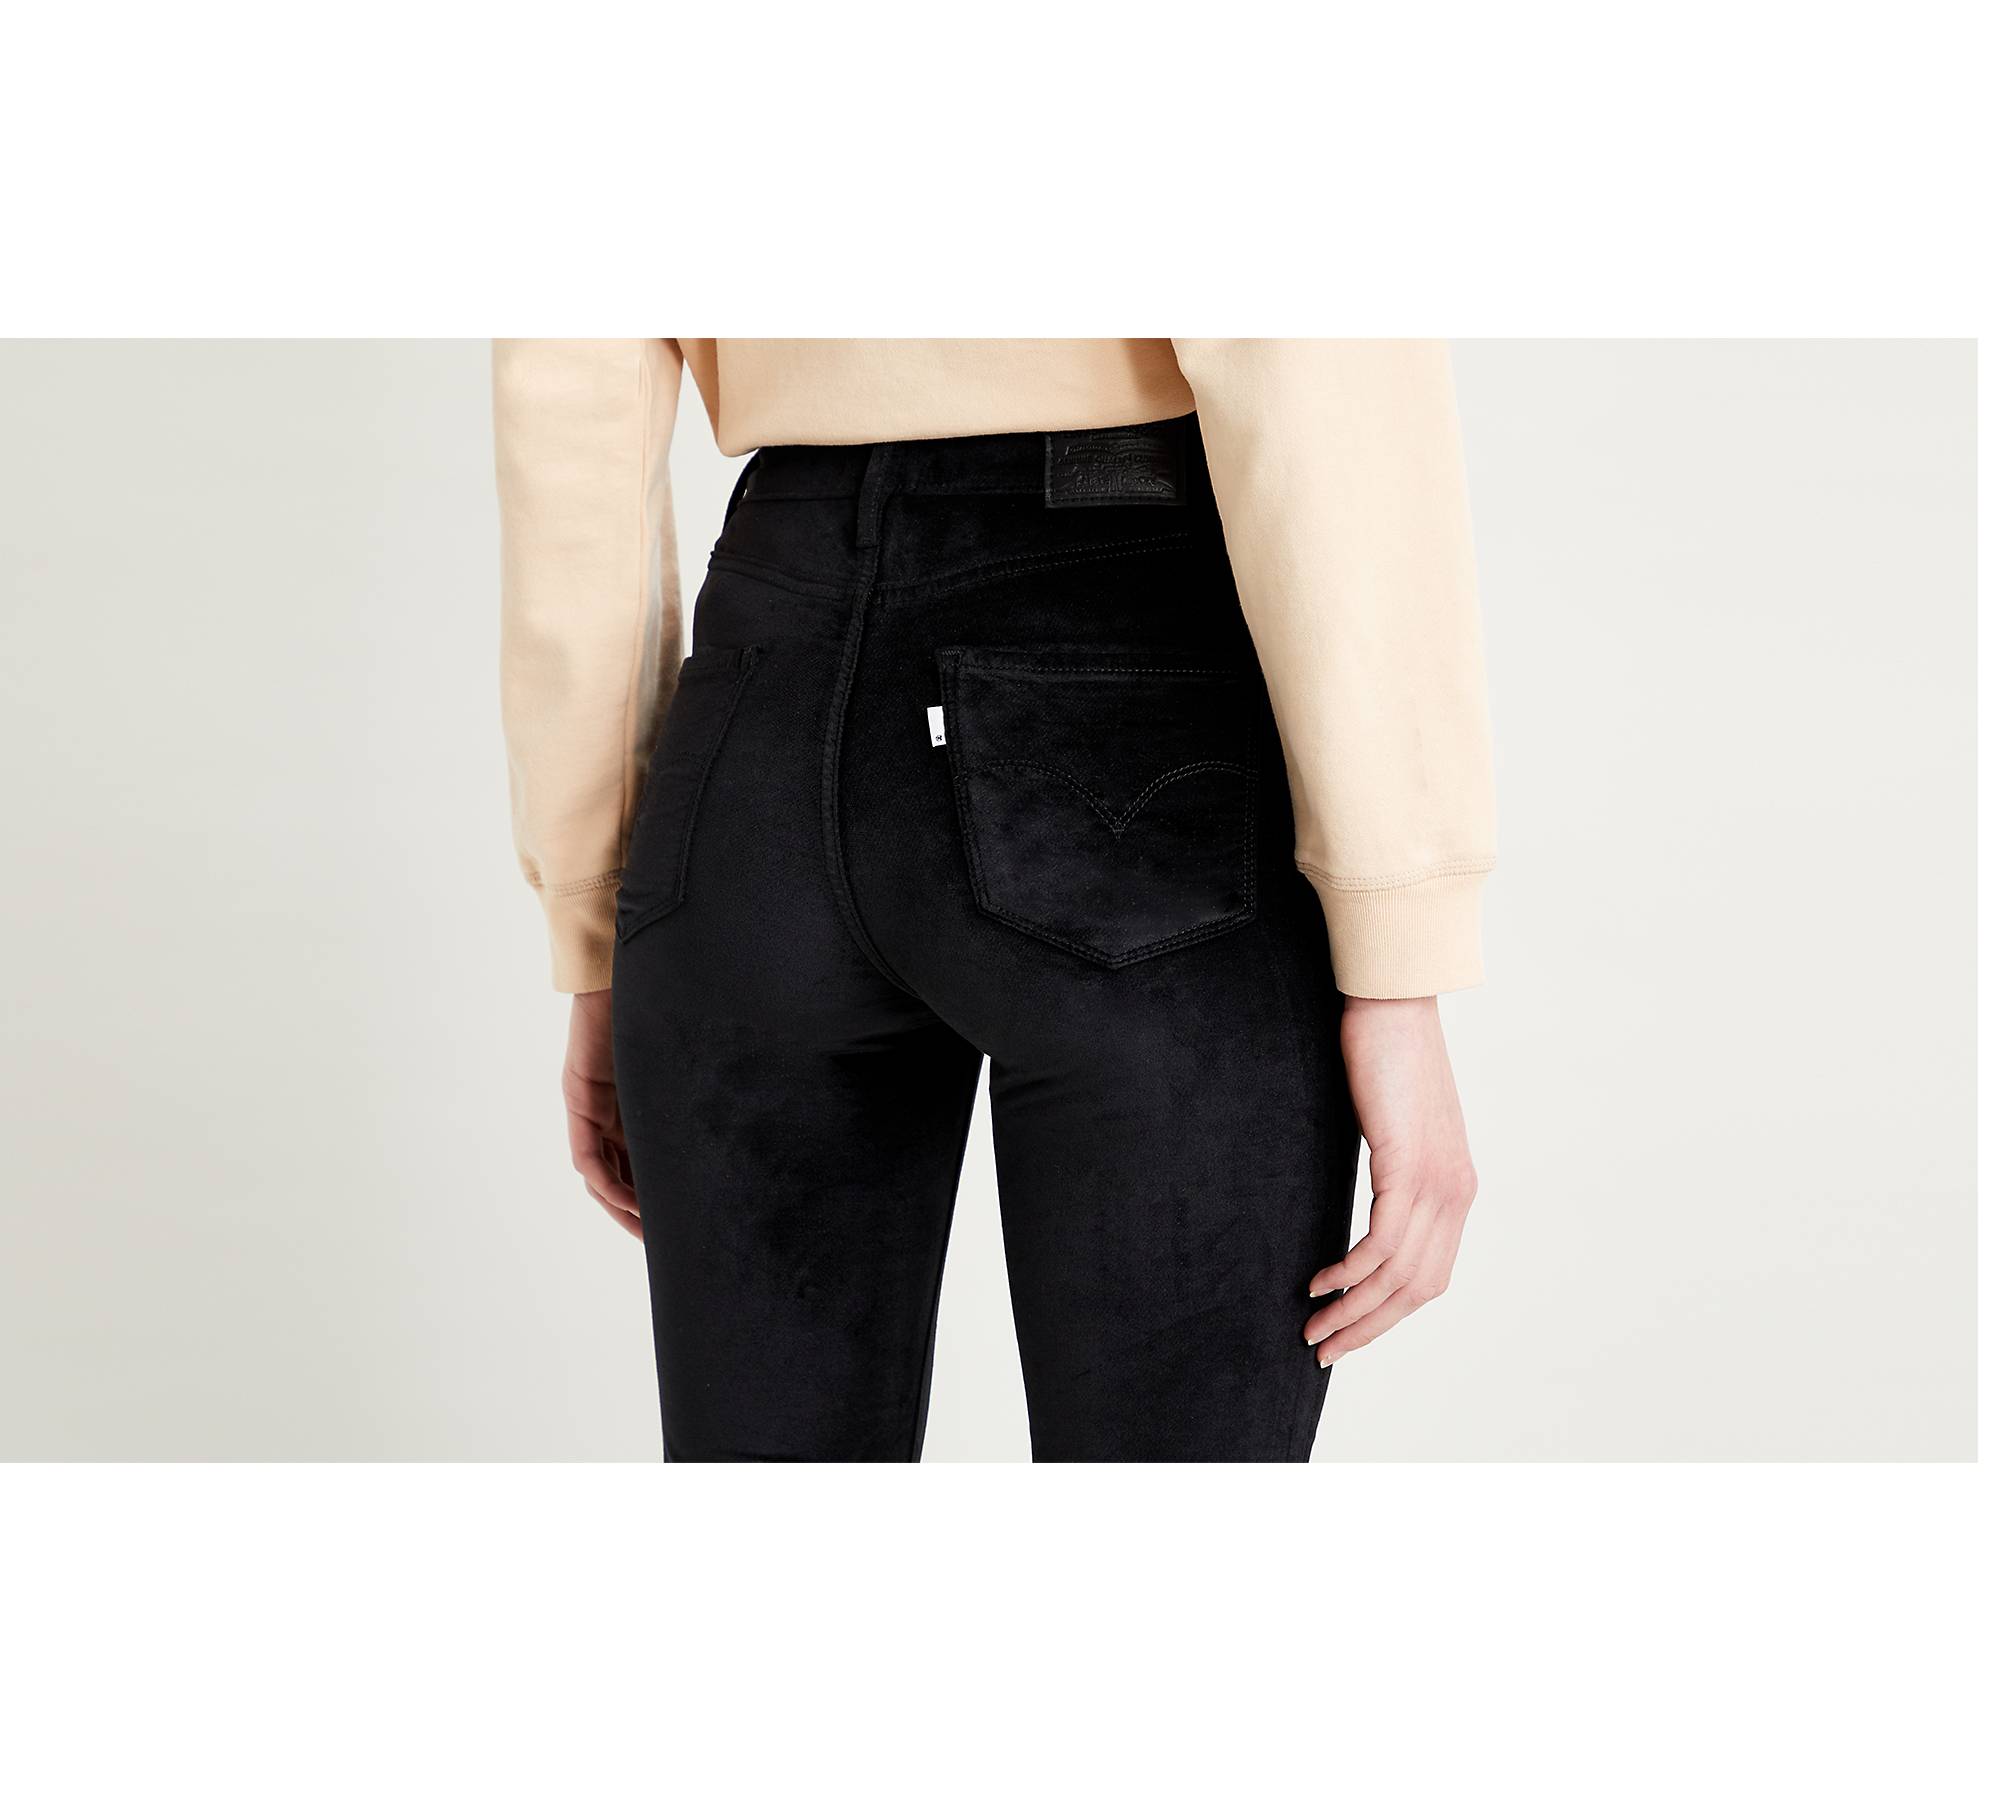 New high-waisted velvet thick jeans women's winter tight-fitting